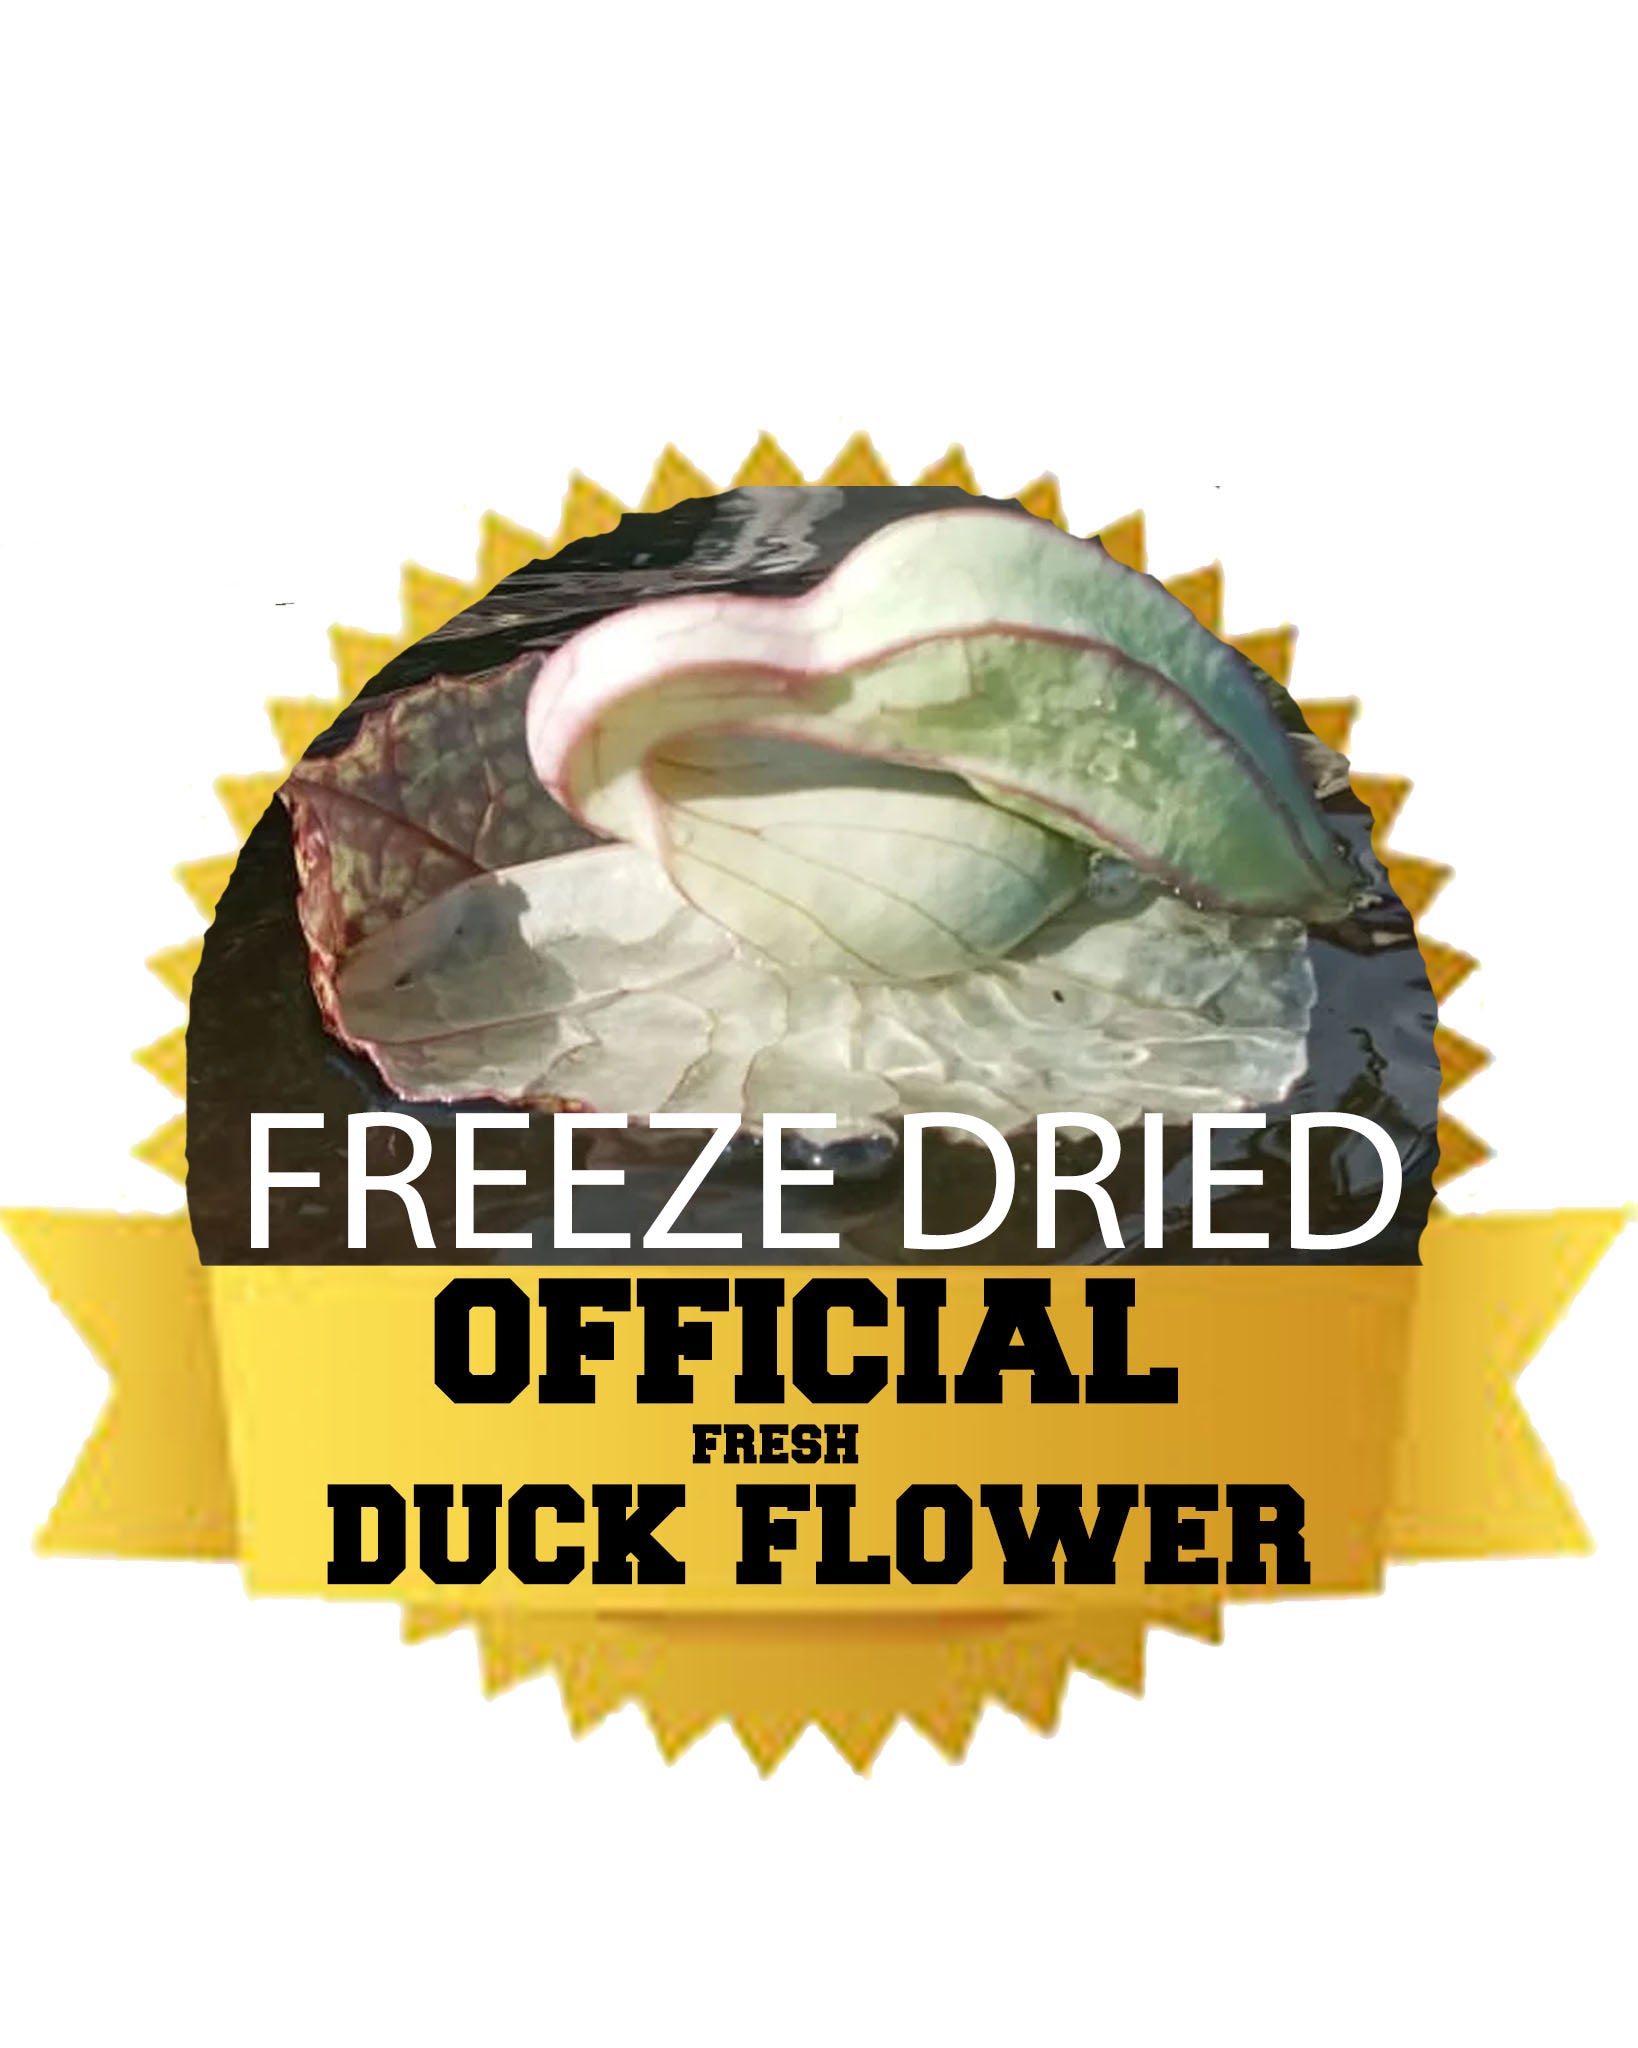 OFFICIAL FRESH DUCK FLOWER freeze dried – OFFICIAL HERBZ health